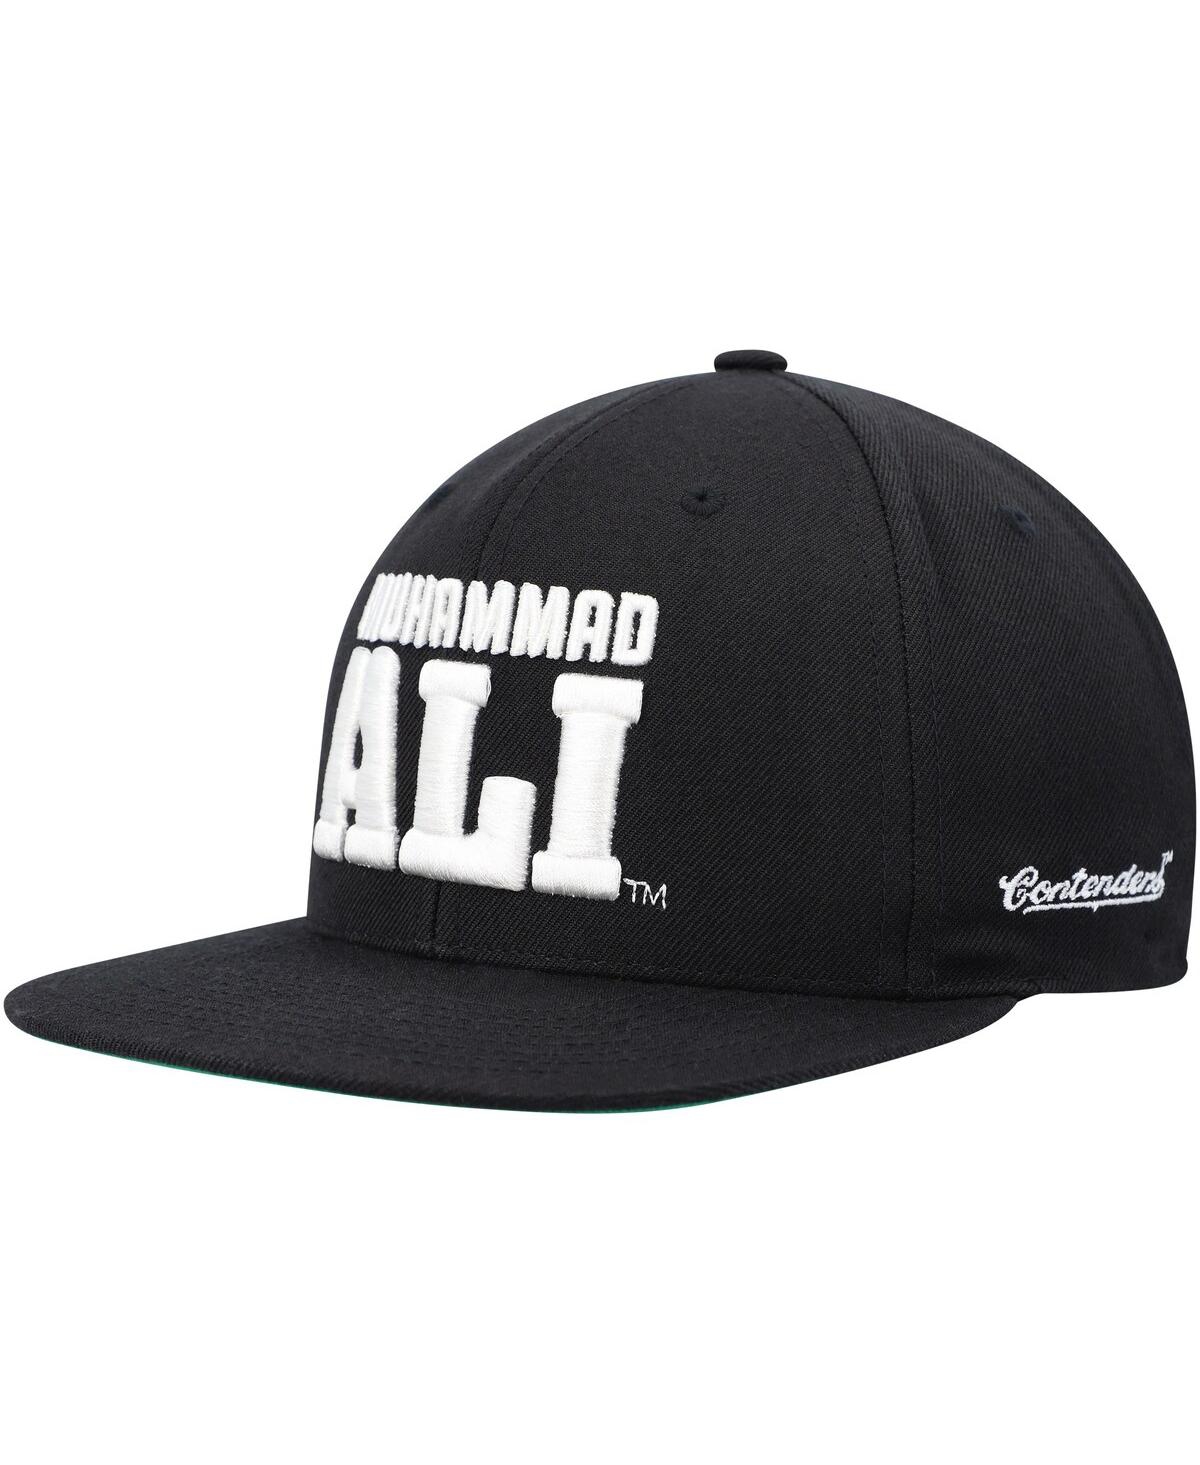 Men's and Women's Contenders Clothing Black Muhammad Ali Snapback Hat - Black